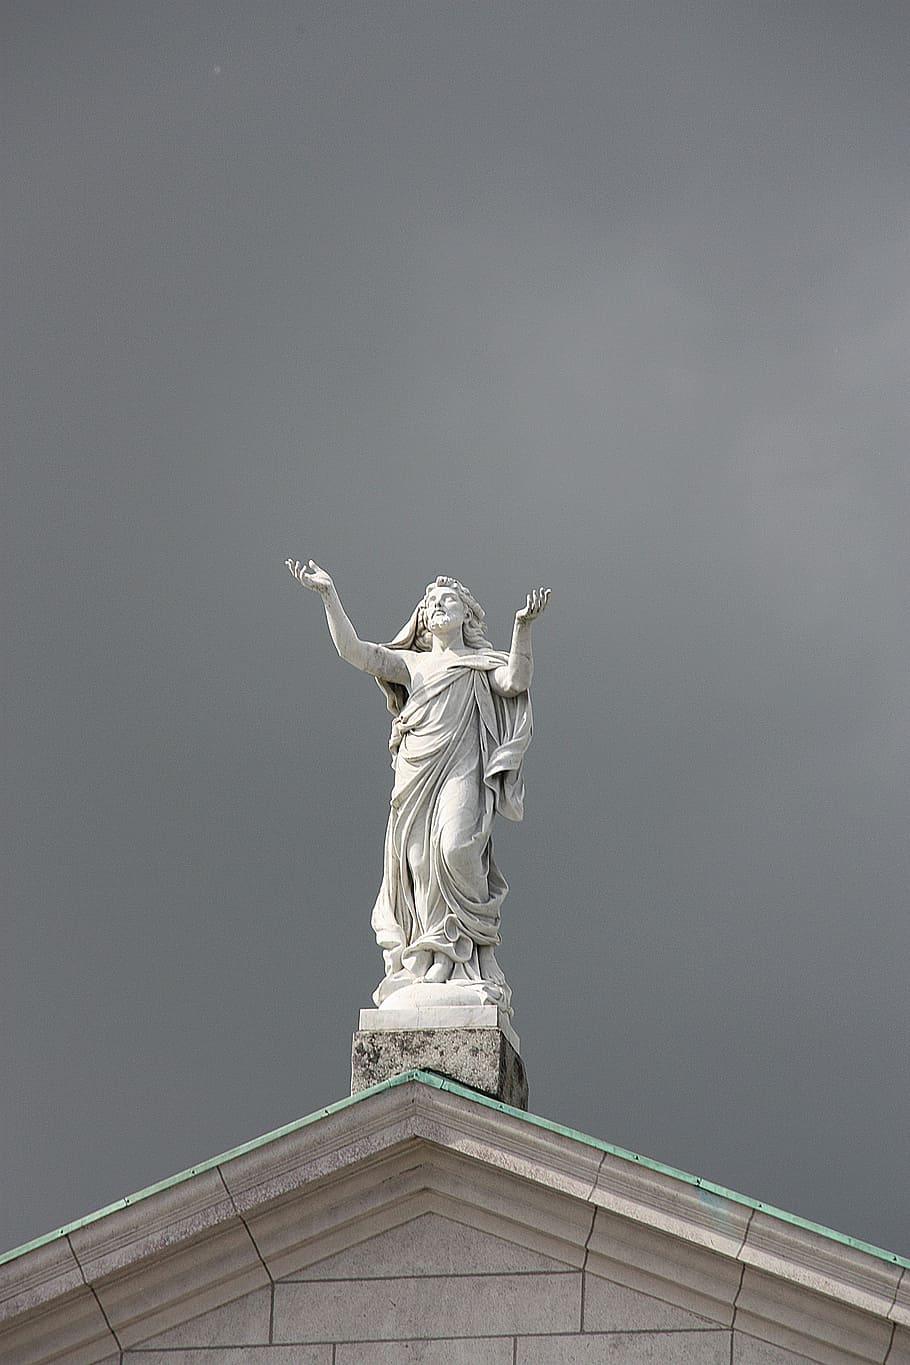 Statue, Holy, Church, Athlone, holy, church, church peter paul, sky, dark clouds, sculpture, architecture